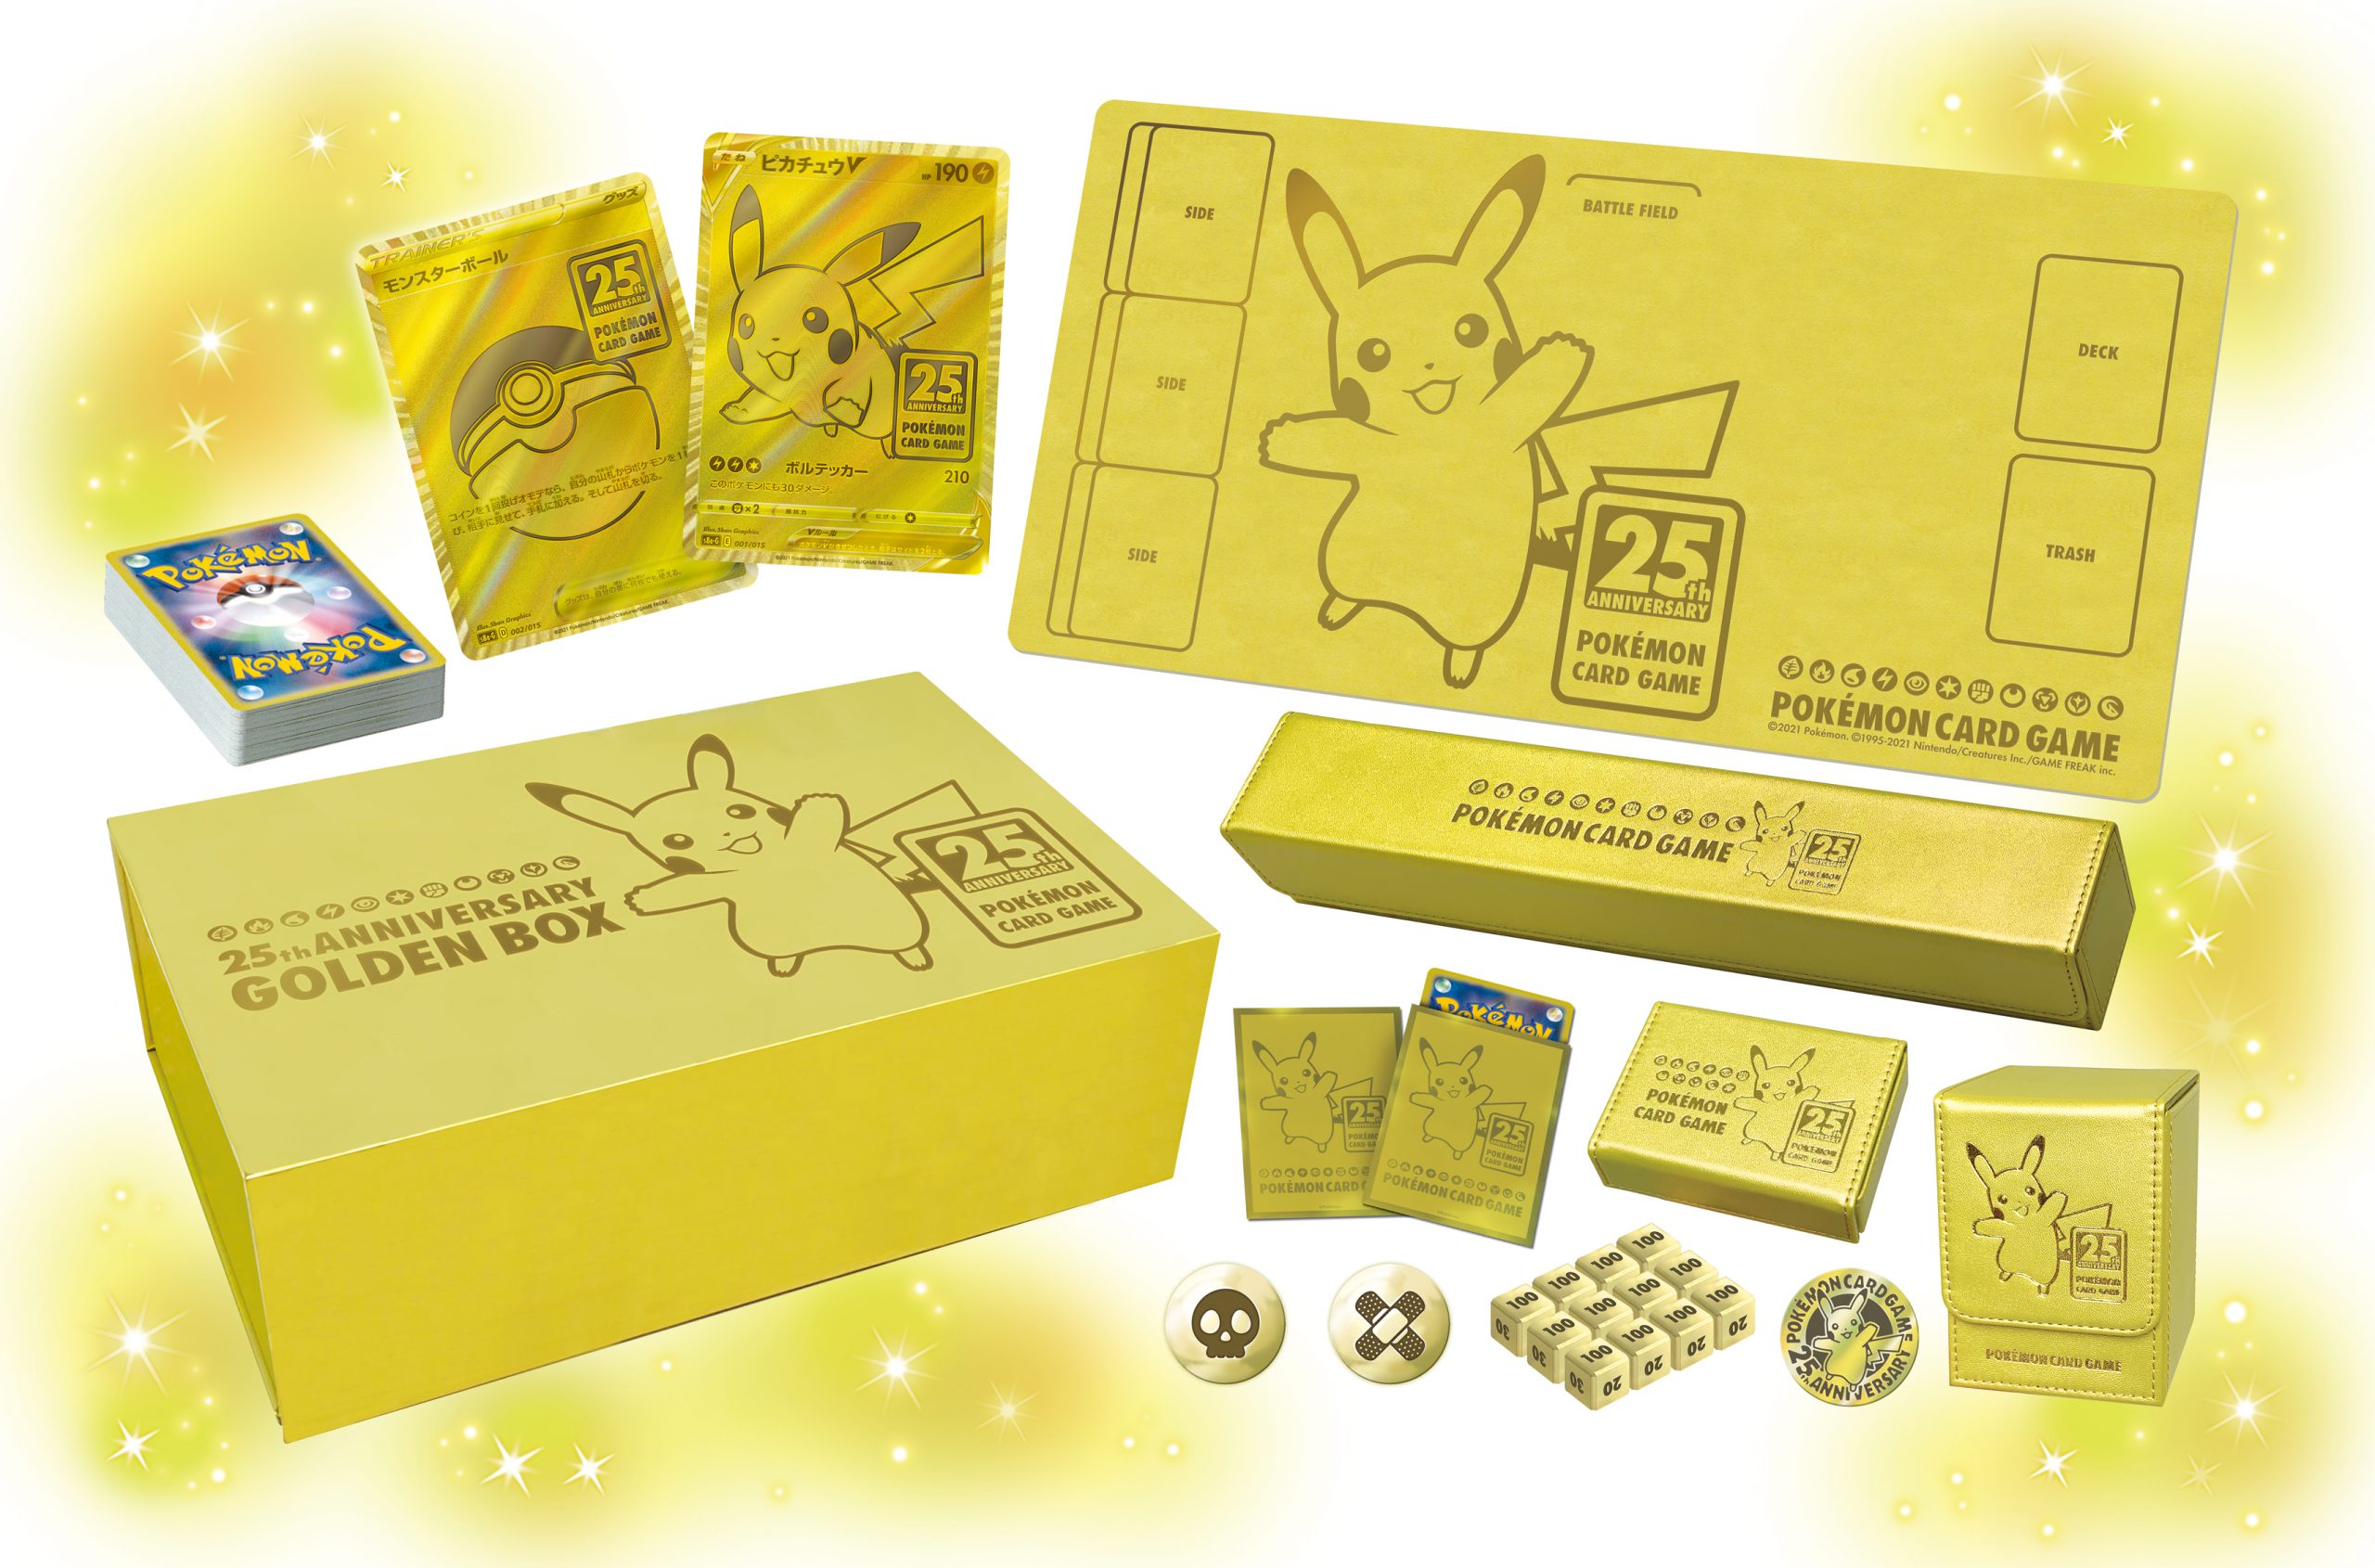 Photos of 25th Anniversary Golden Box! - | PokéBeach.com Forums